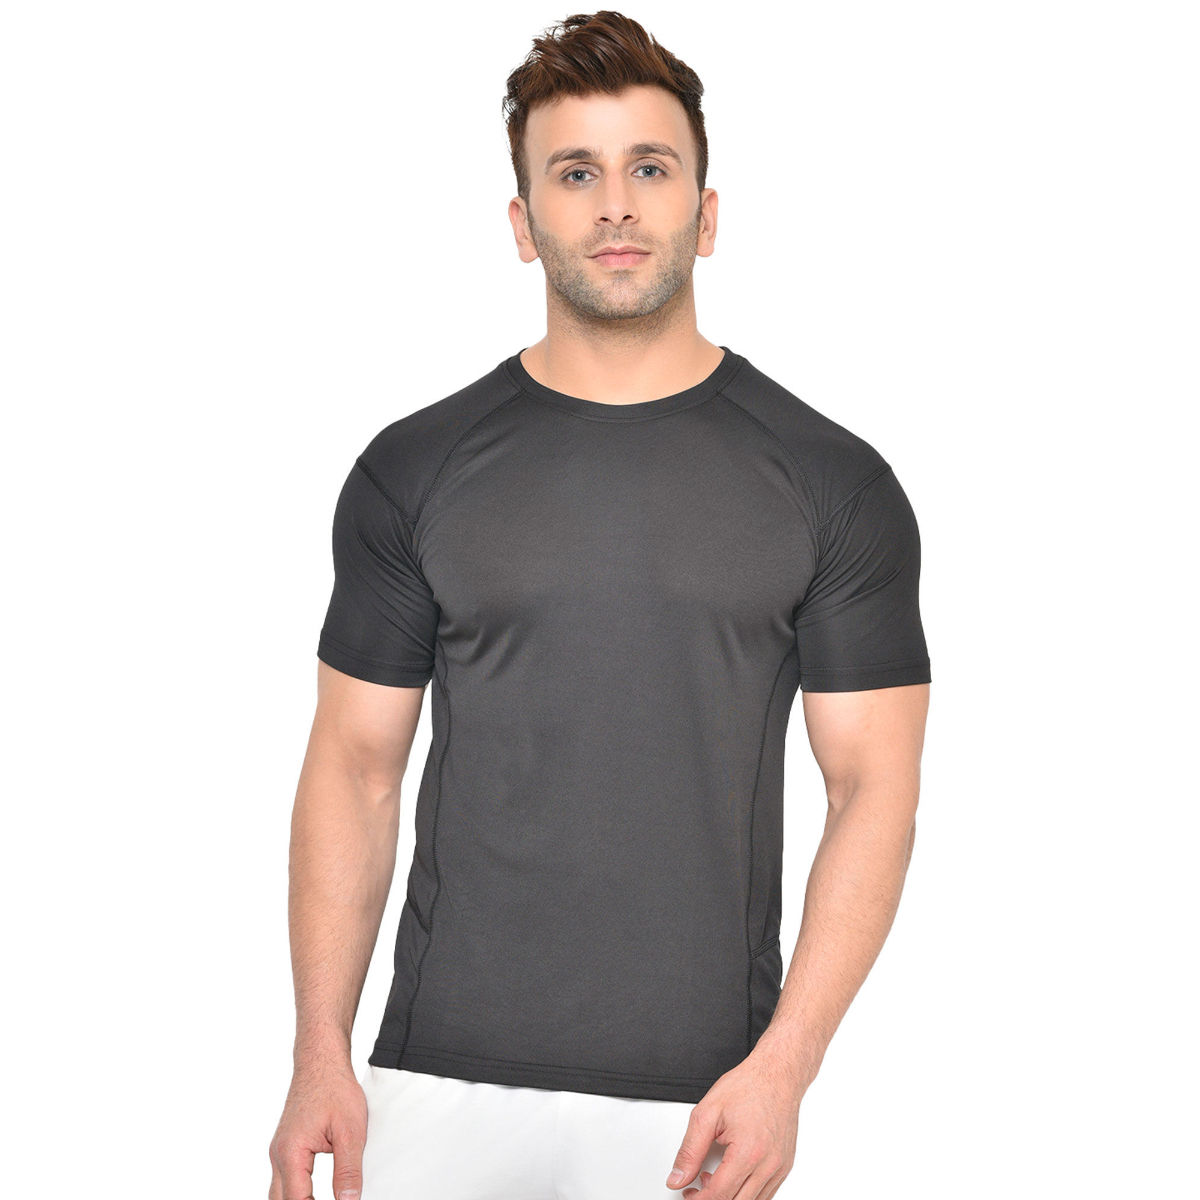 CHKOKKO Men Round Neck Regular Dry Fit Gym Sports T-Shirt (3XL)